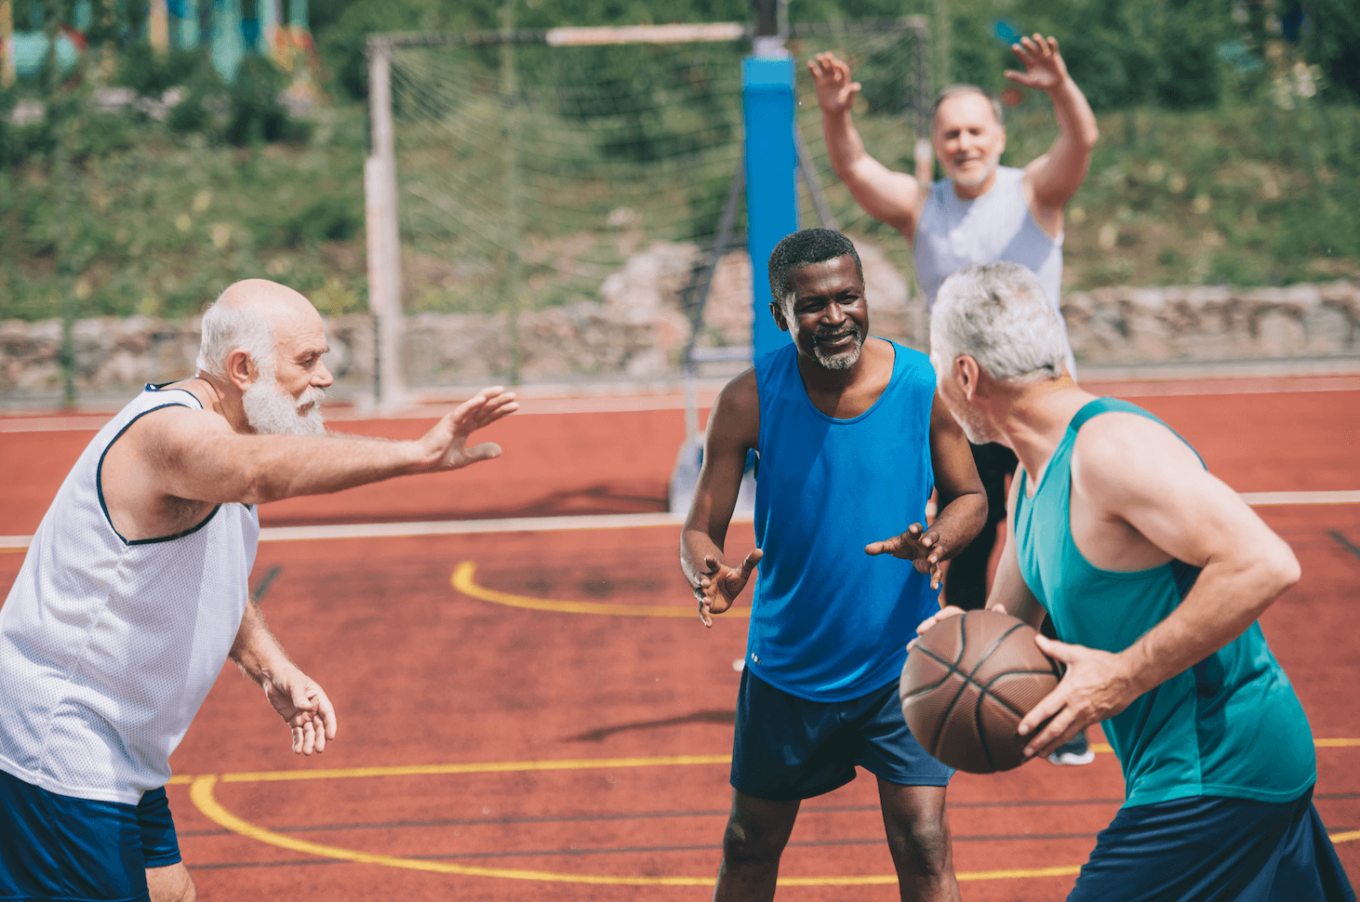 Interracial elderly sportsmen playing basketball together on playground by LightFieldStudios